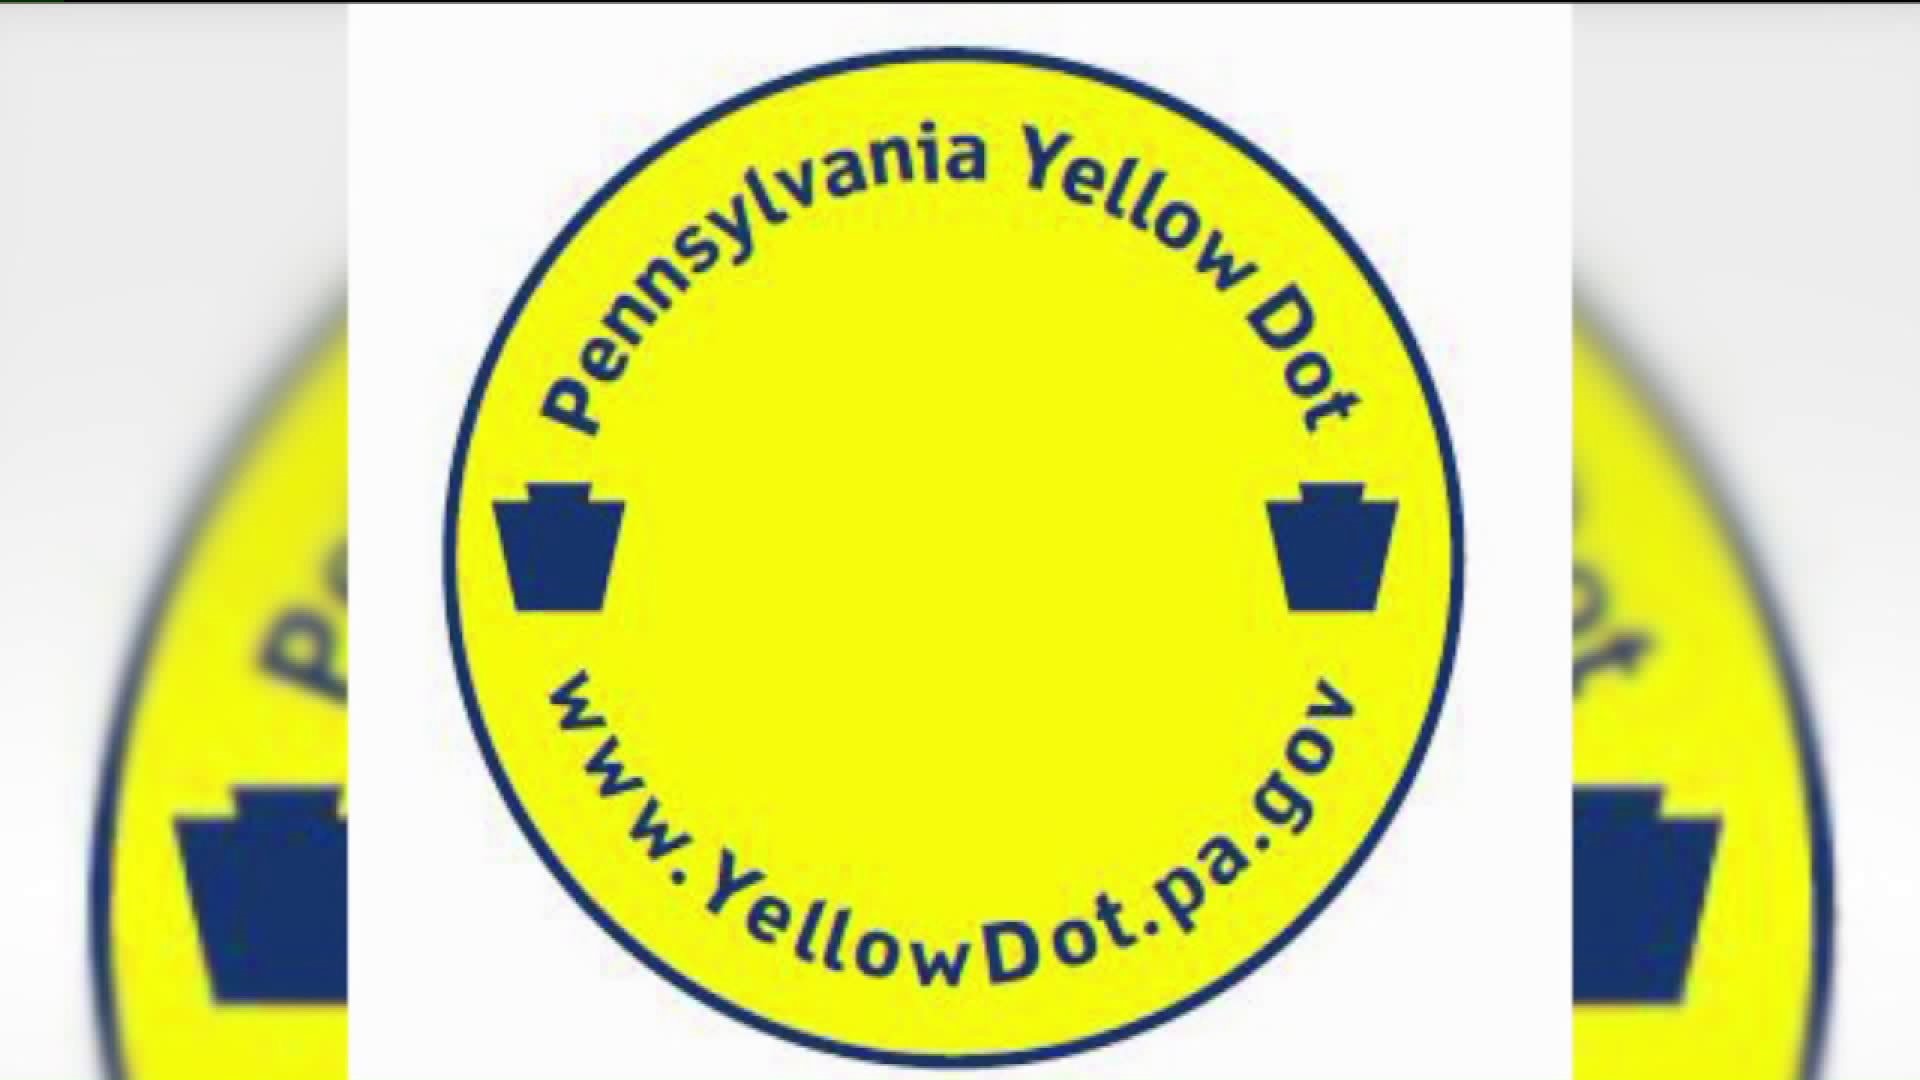 A Visual That's Vital: PennDOT's Yellow DOT Program